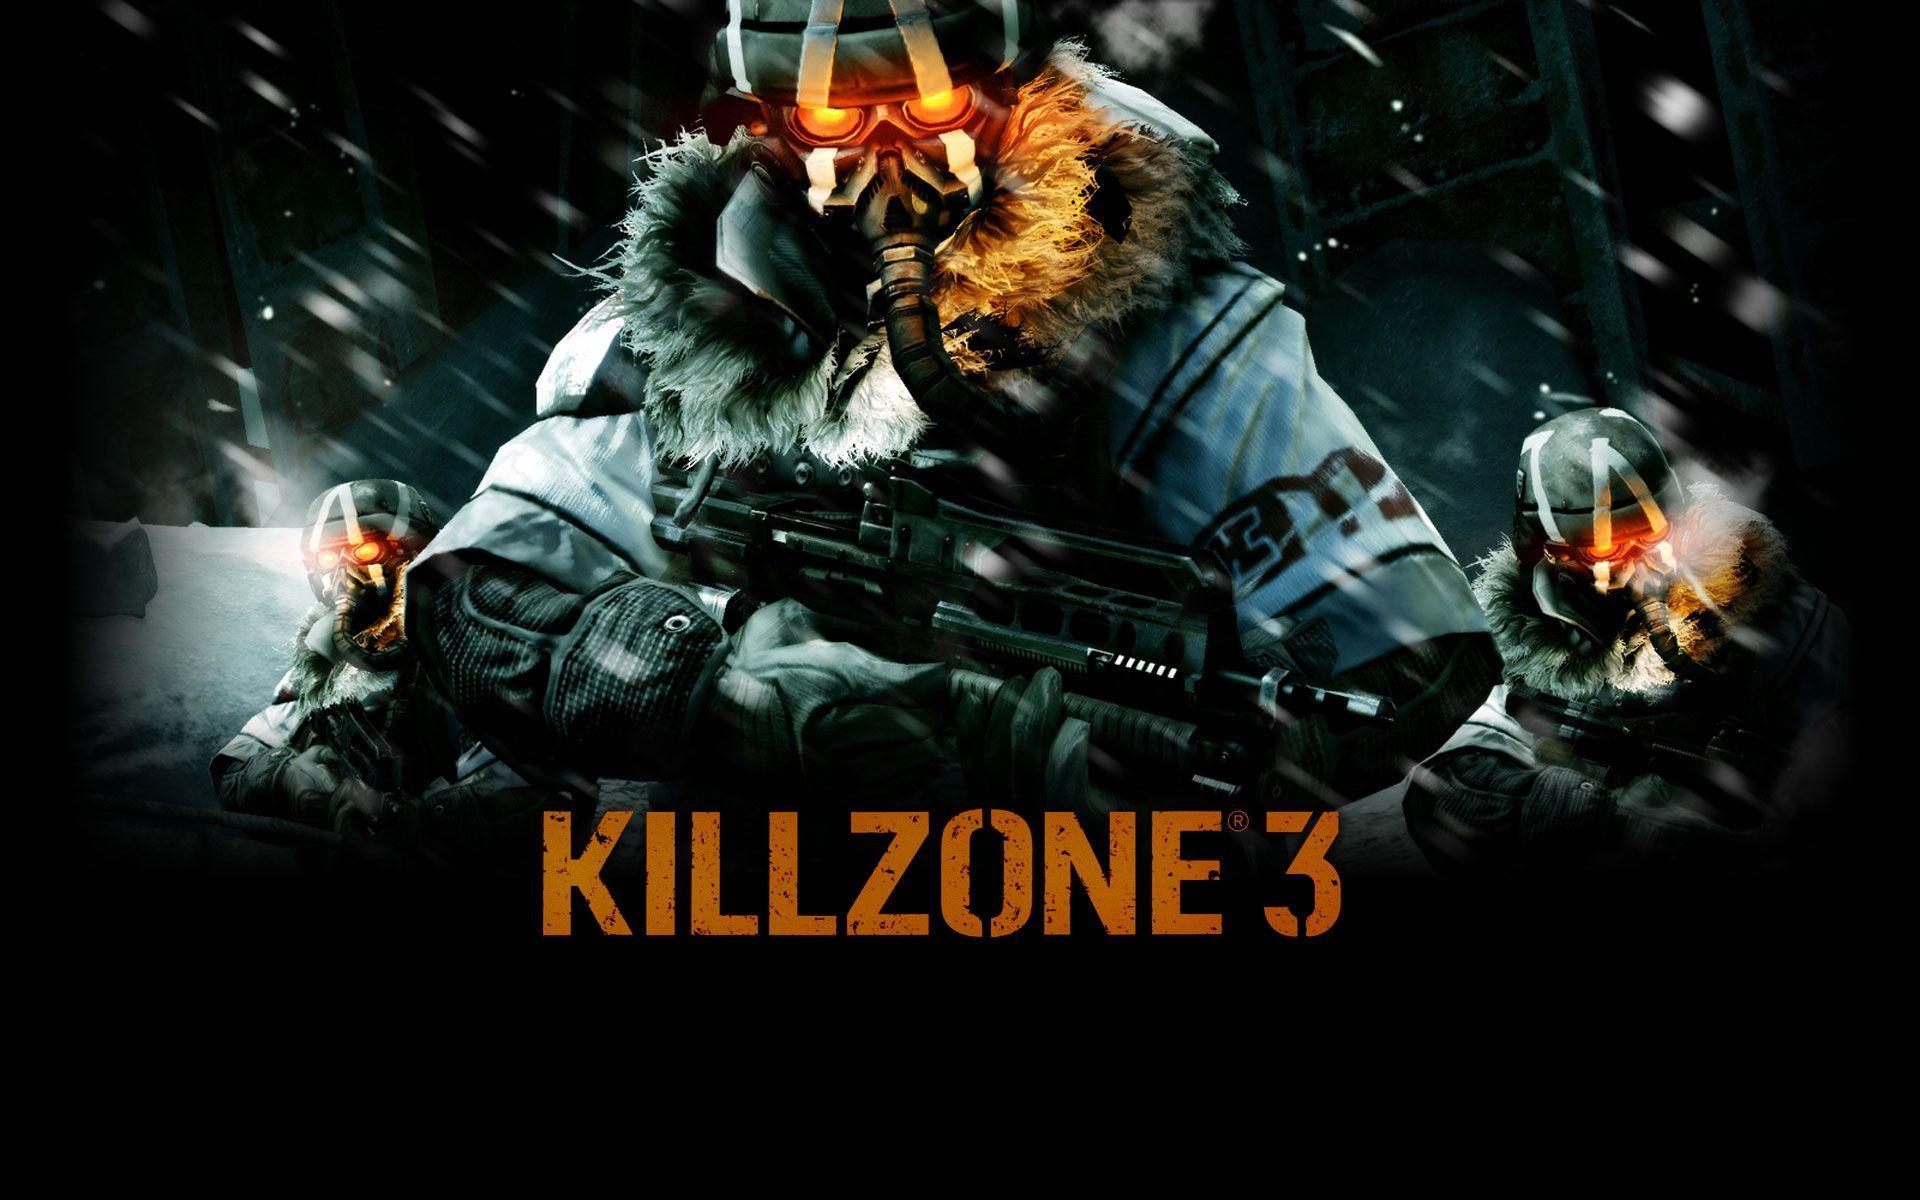 killzone 3. Click on the image to open the Killzone wallpaper, then